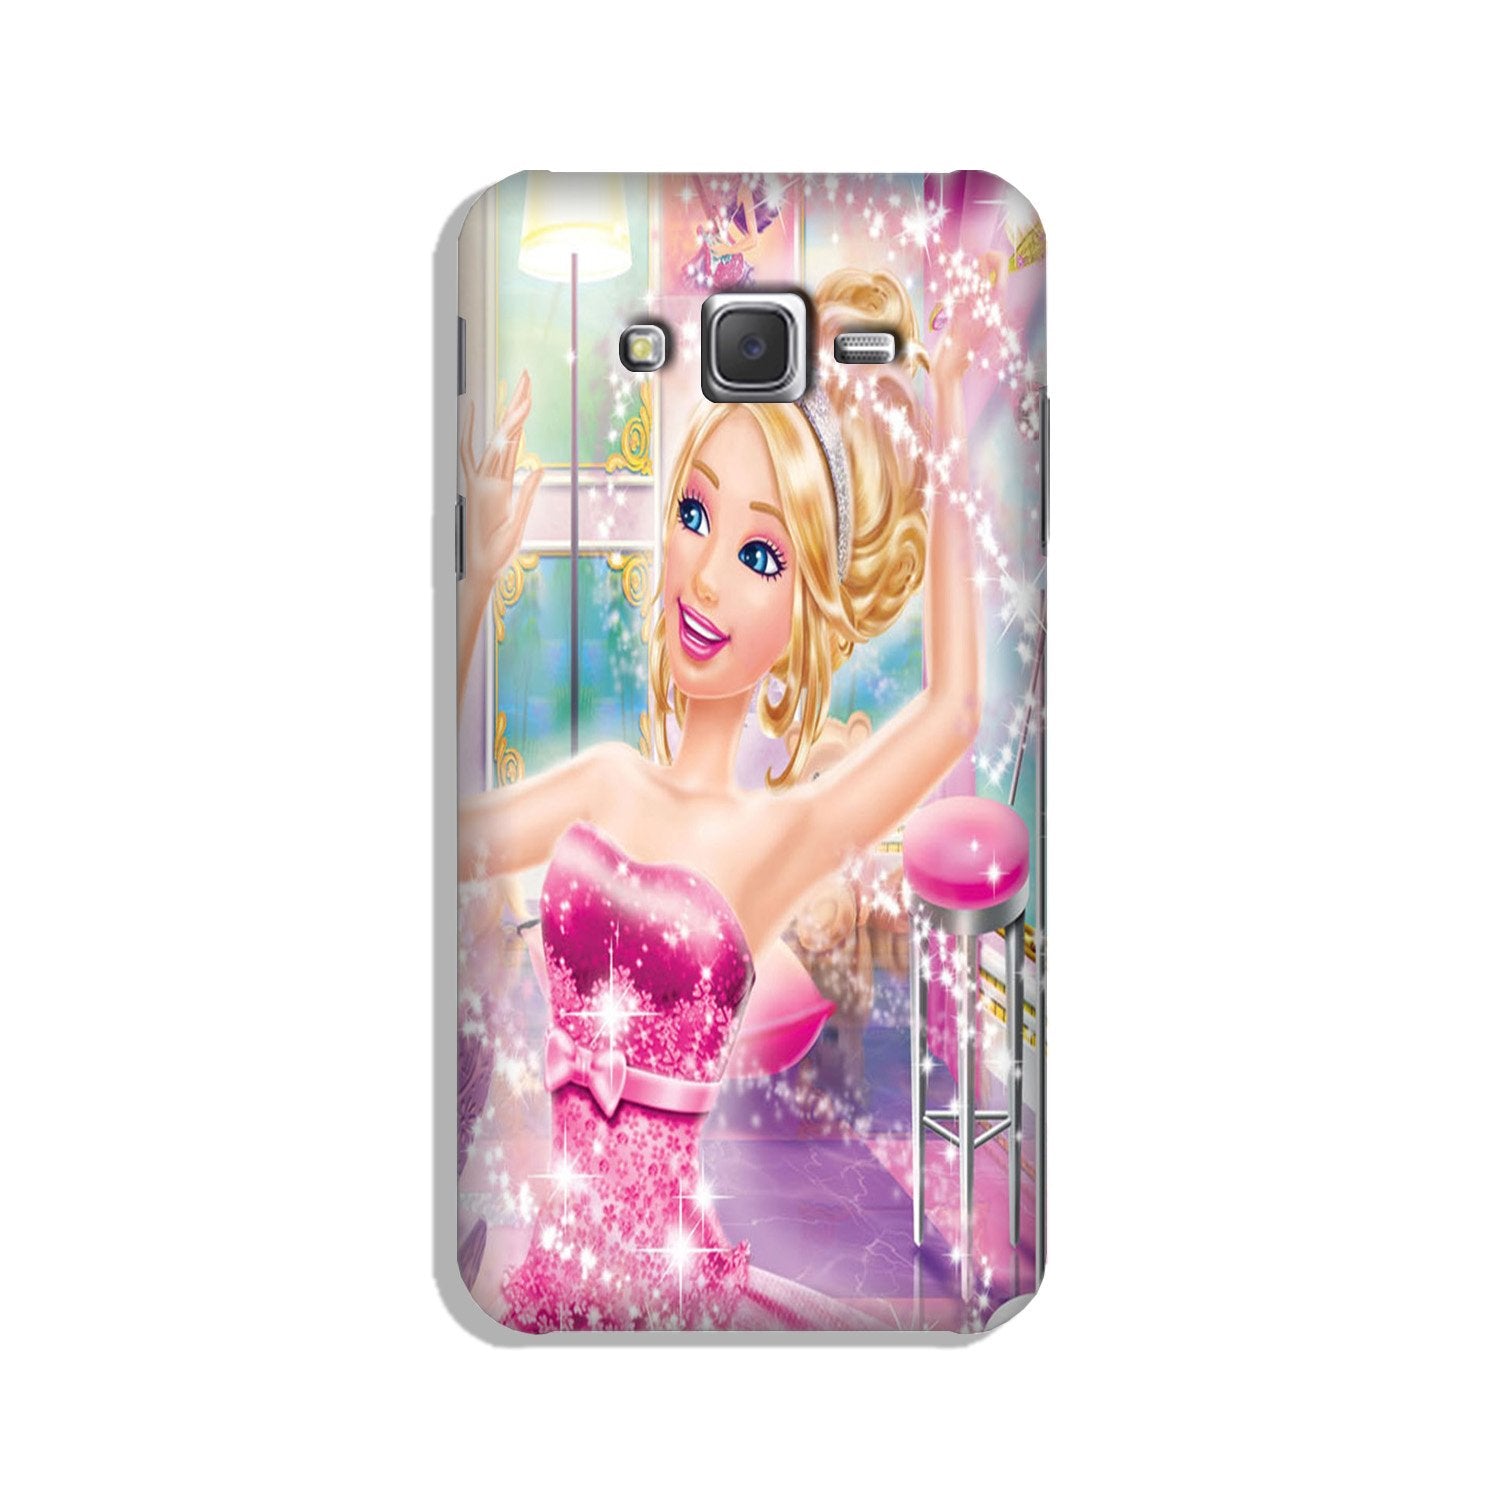 Princesses Case for Galaxy J3 (2015)